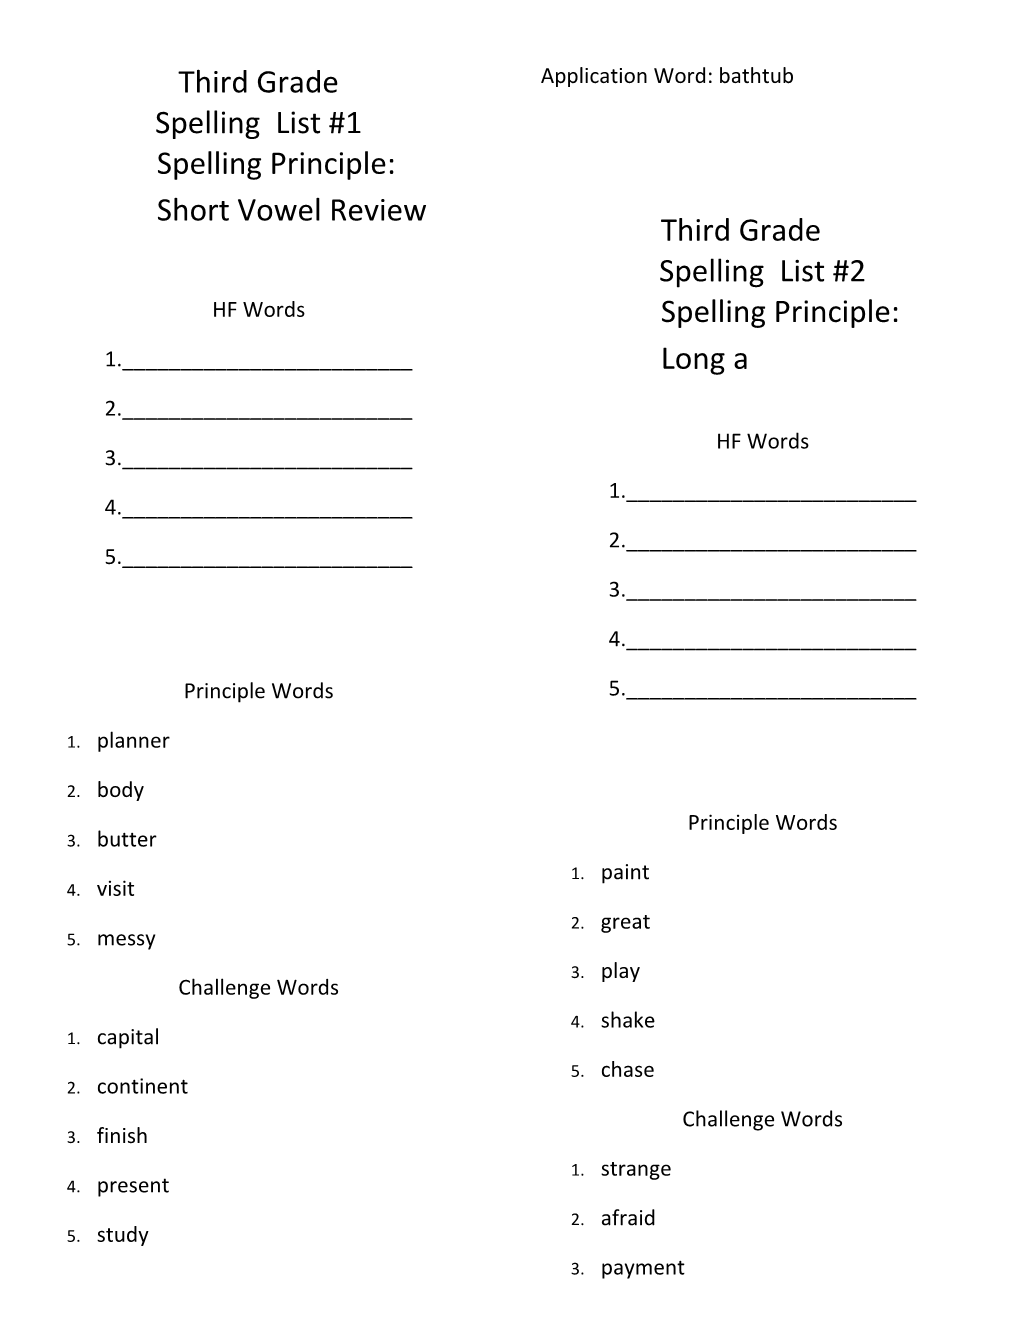 Spelling Principle: Short Vowel Review